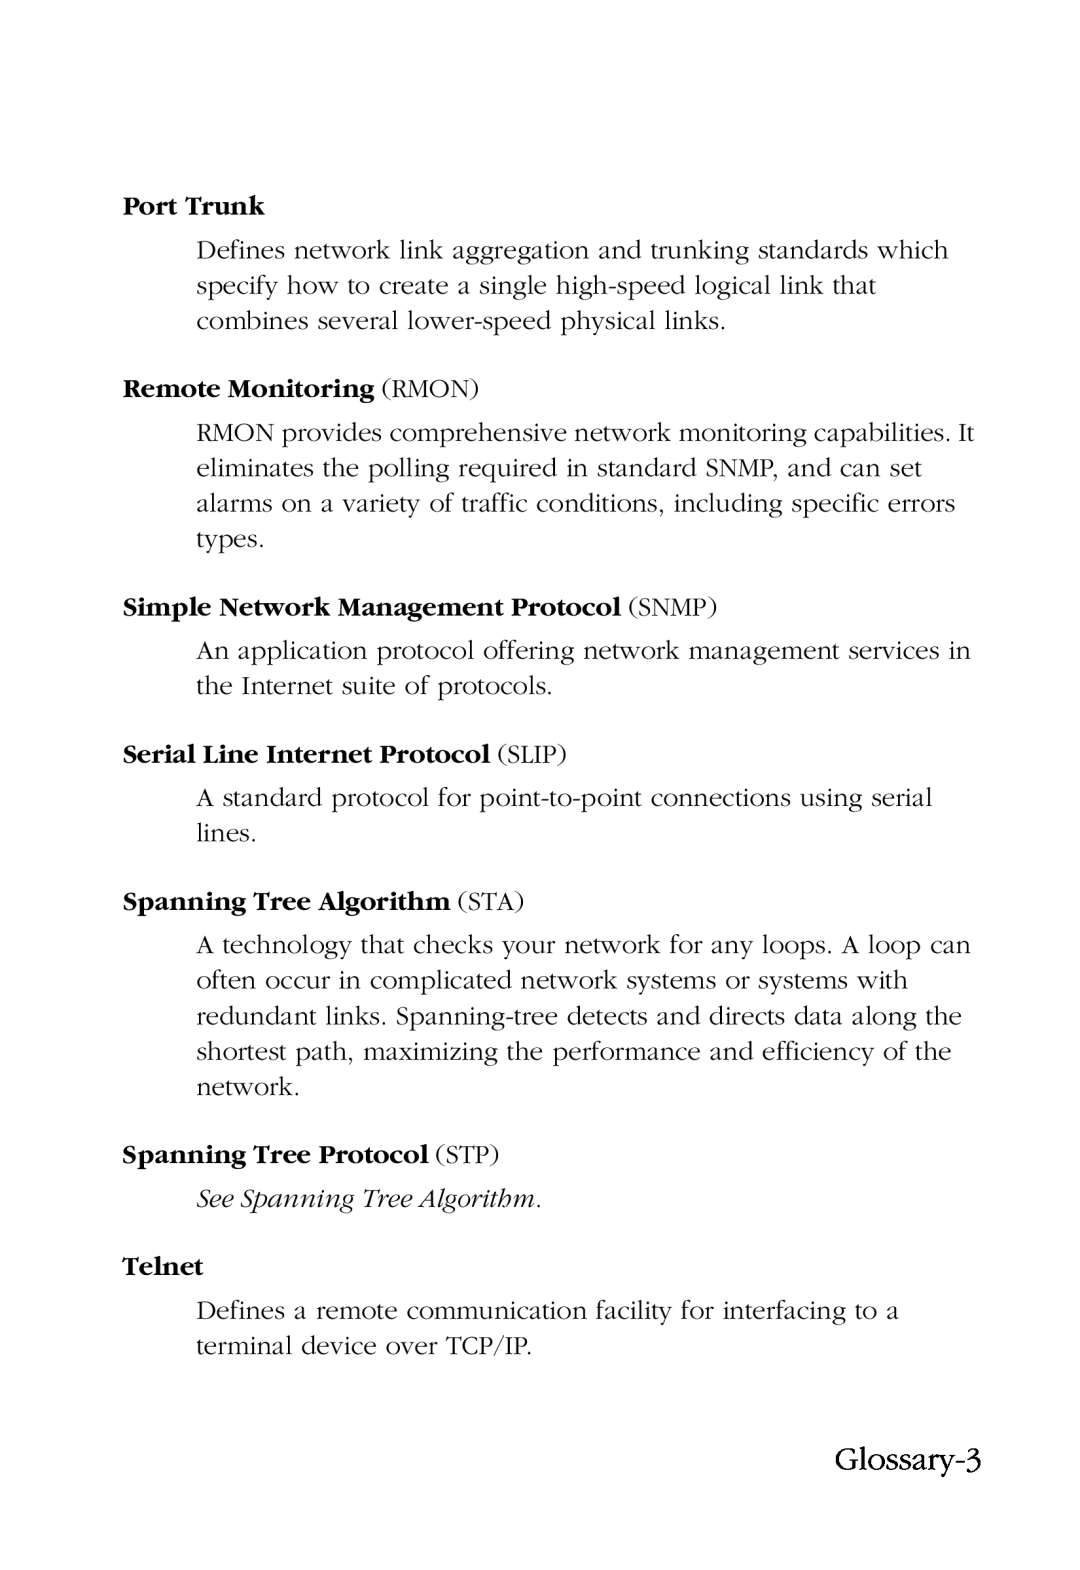 SMC Networks SMC6924VF Glossary-3, Port Trunk, Remote Monitoring RMON, Simple Network Management Protocol SNMP, Telnet 